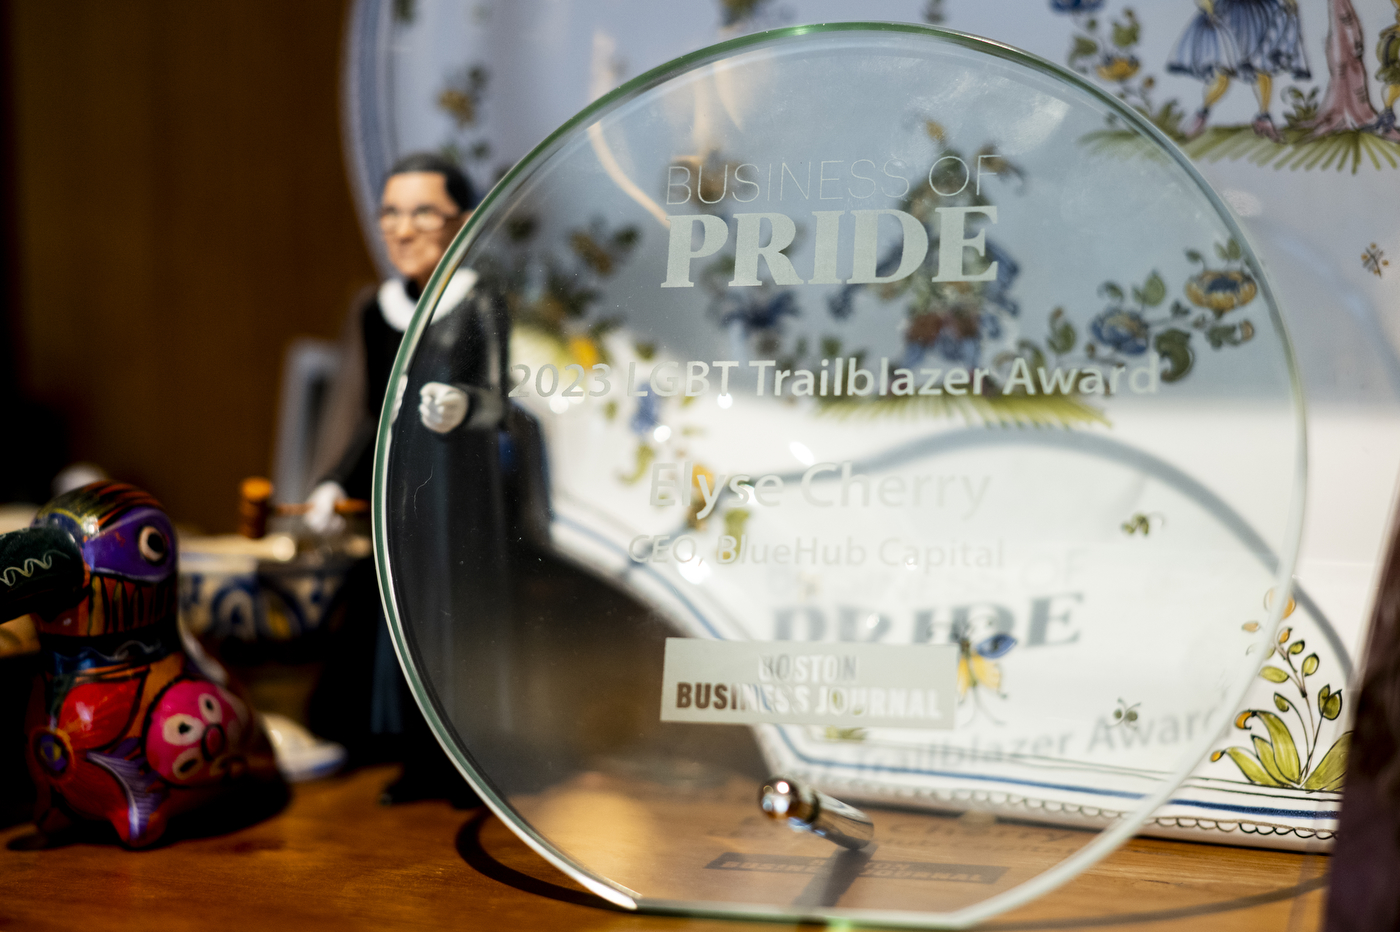 Boston Business Journal Business of Pride Trailblazer Award